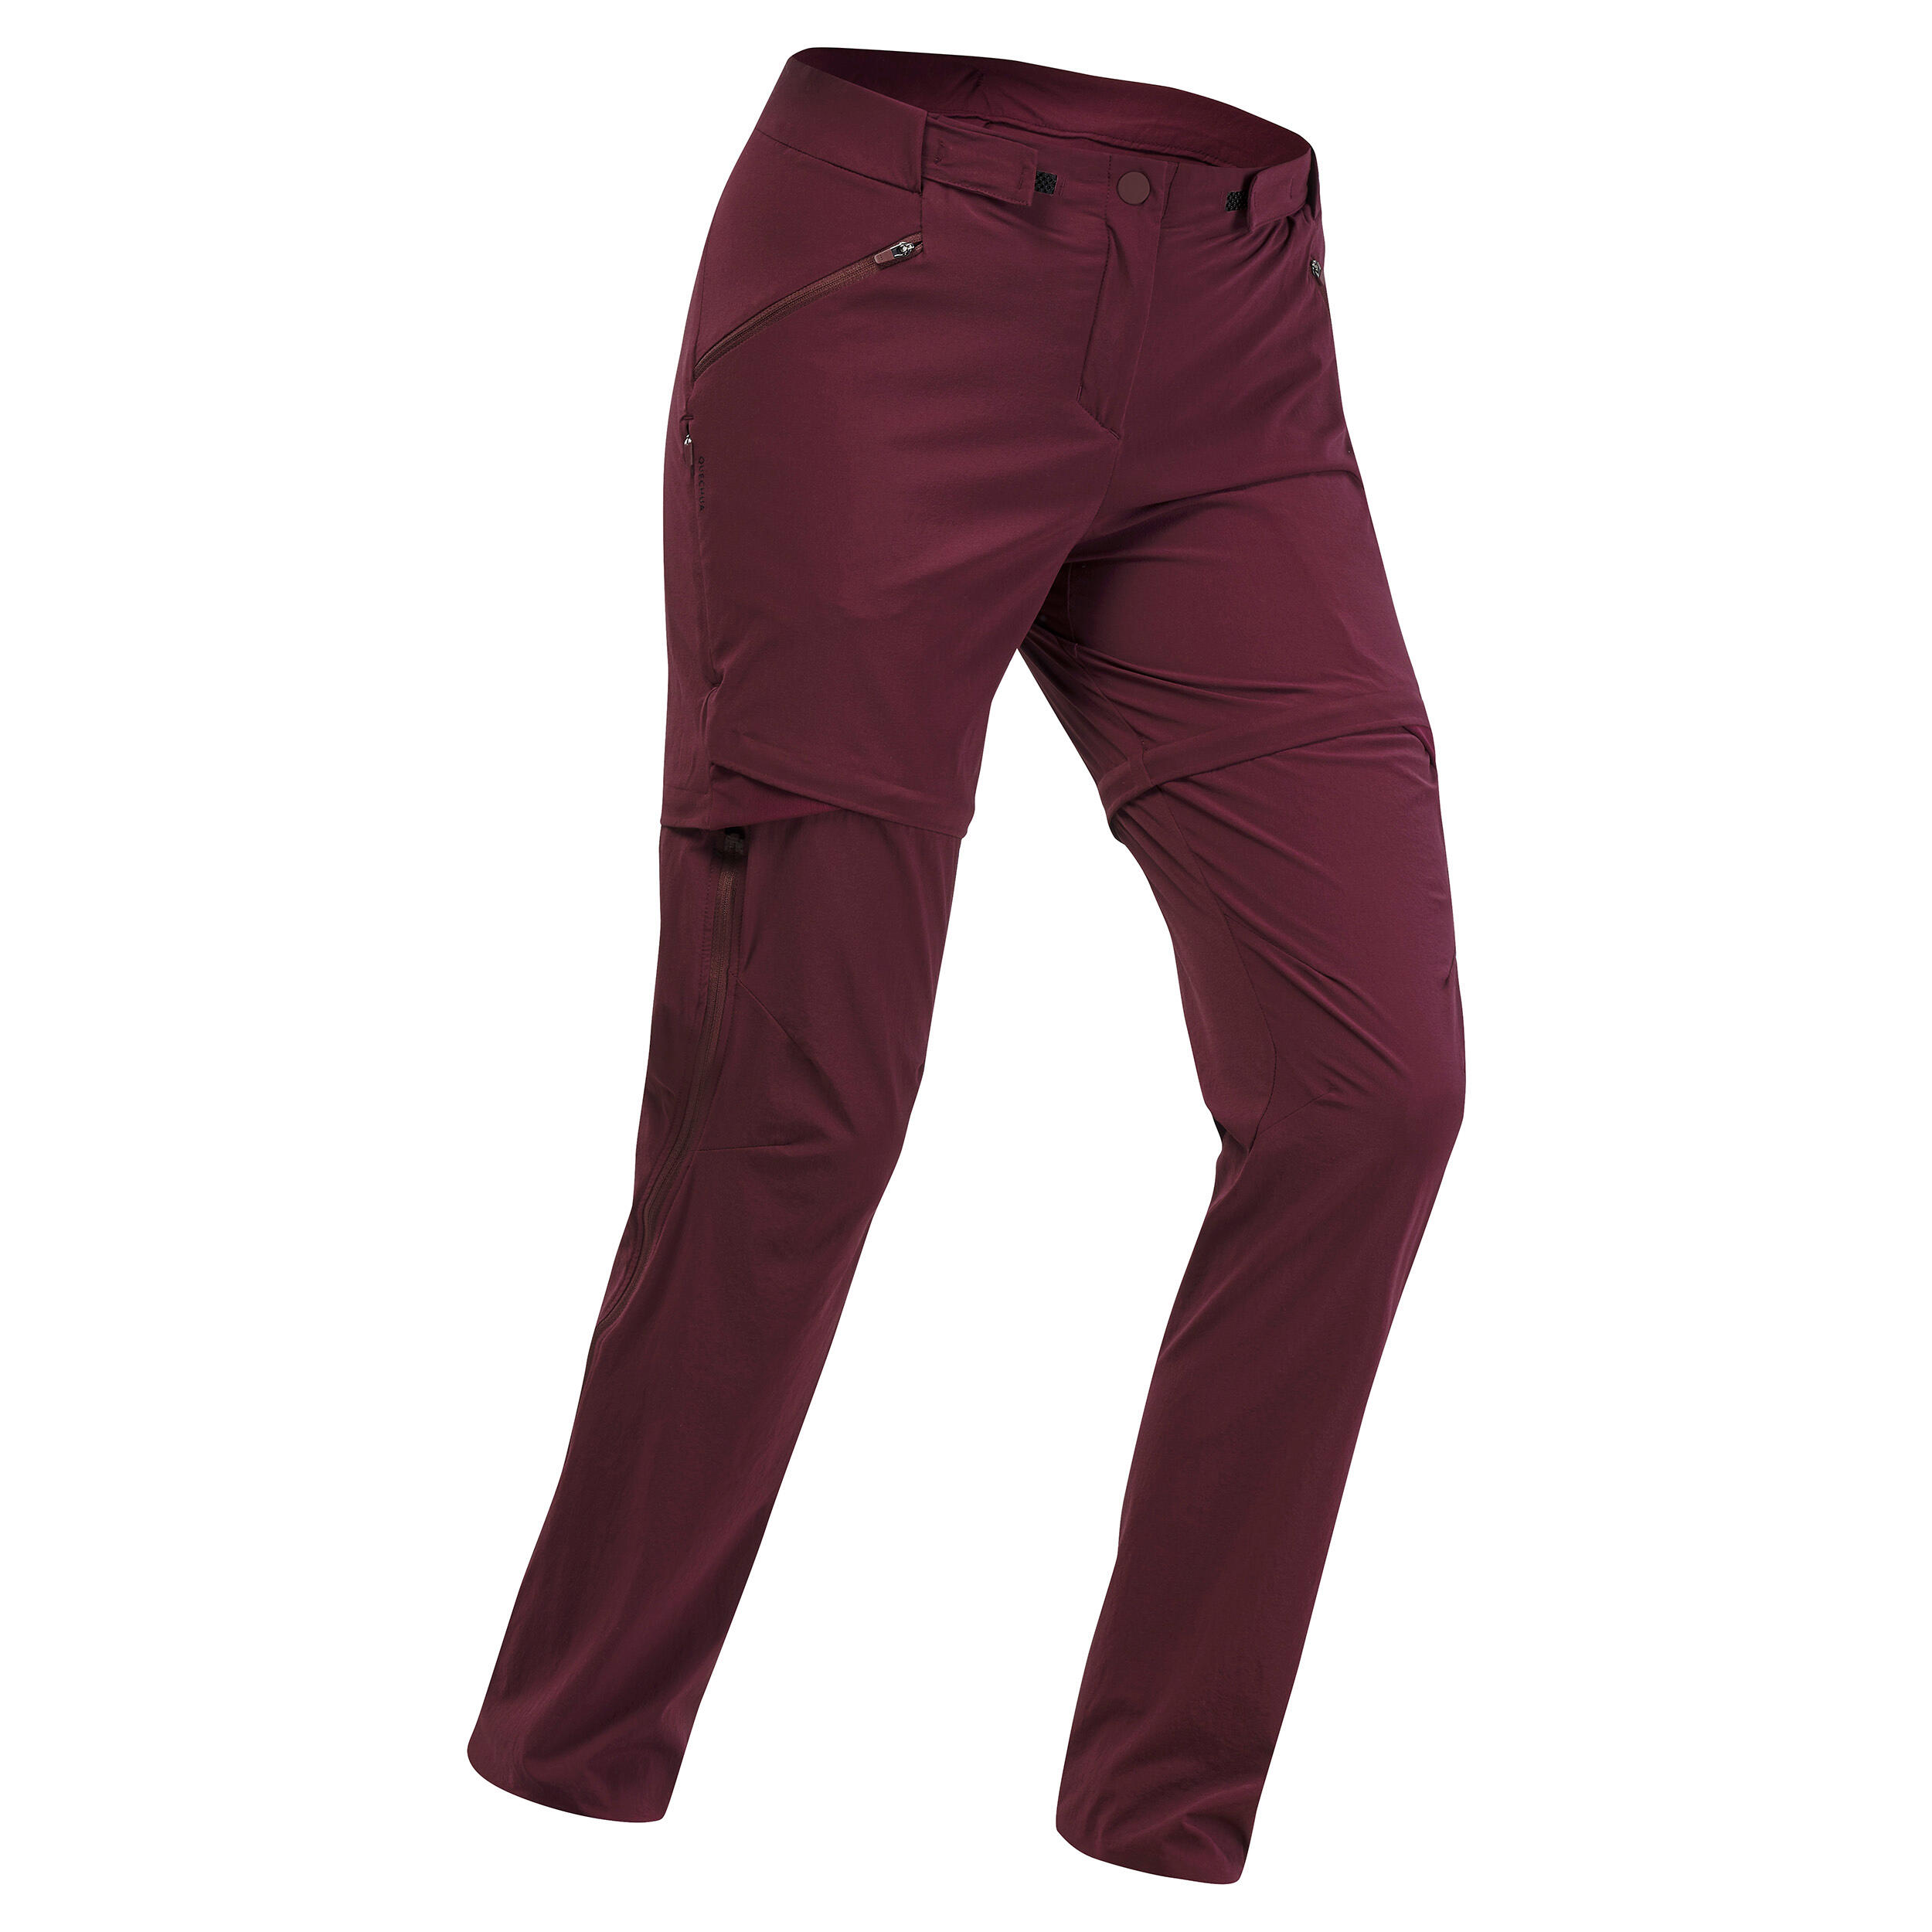 Women's Convertible Mountain Walking Trousers - MH550 - Bordeaux  4/15